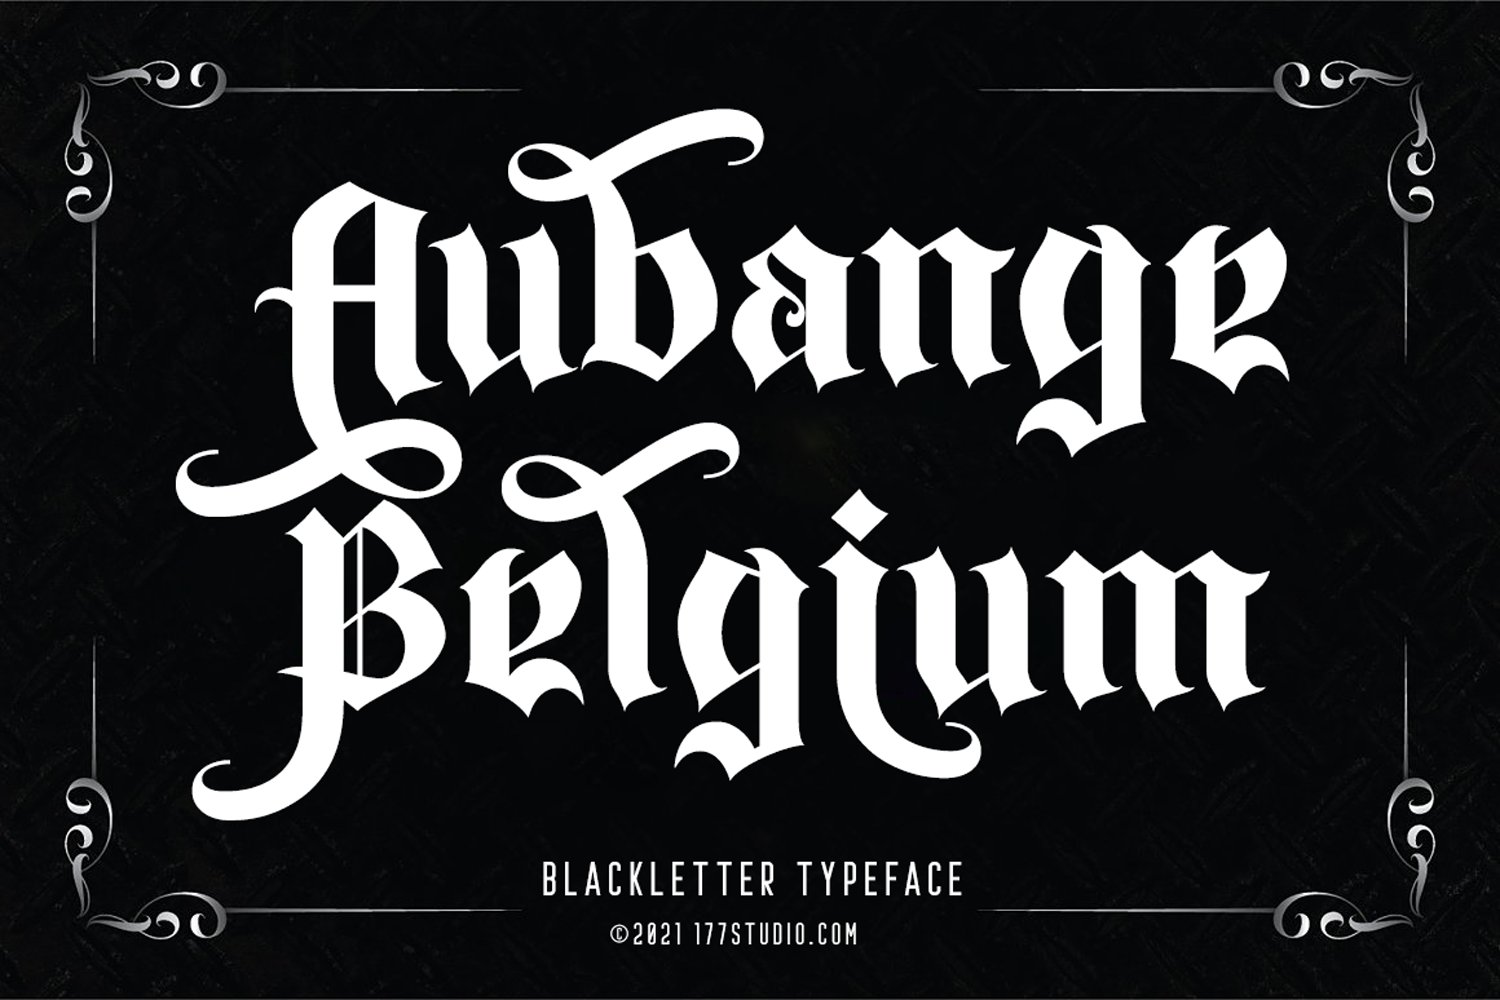 Aubange Belgium Font cover image.